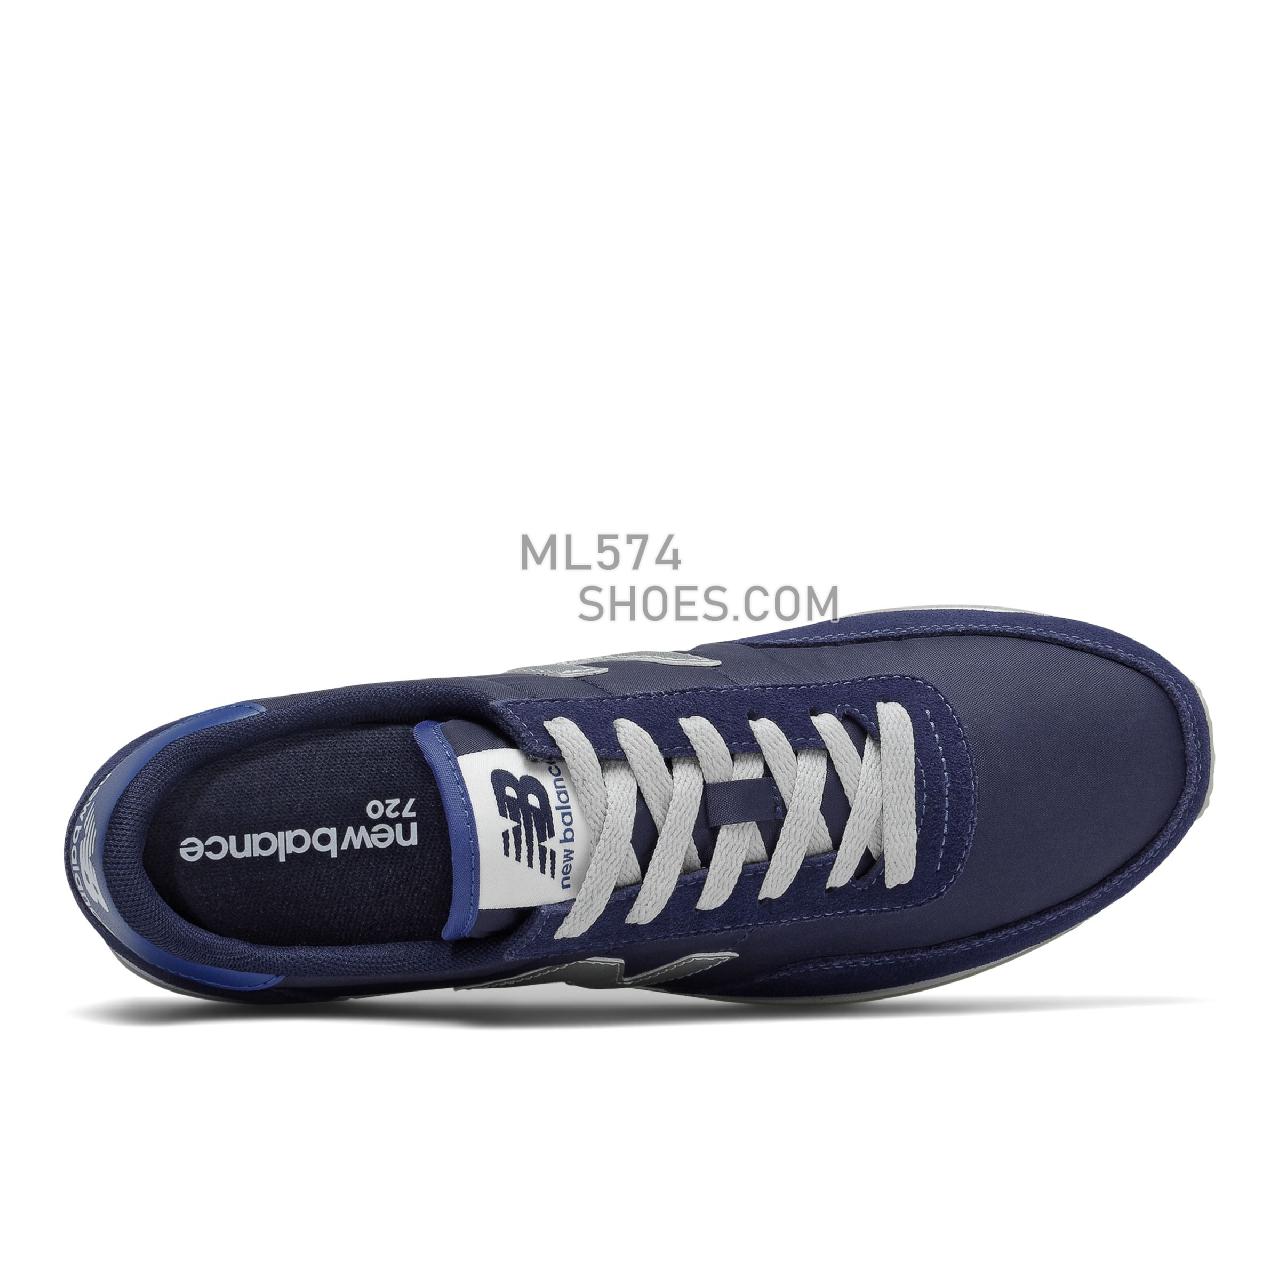 New Balance 720 - Unisex Men's Women's Classic Sneakers - Pigment with Captain Blue - UL720NE1